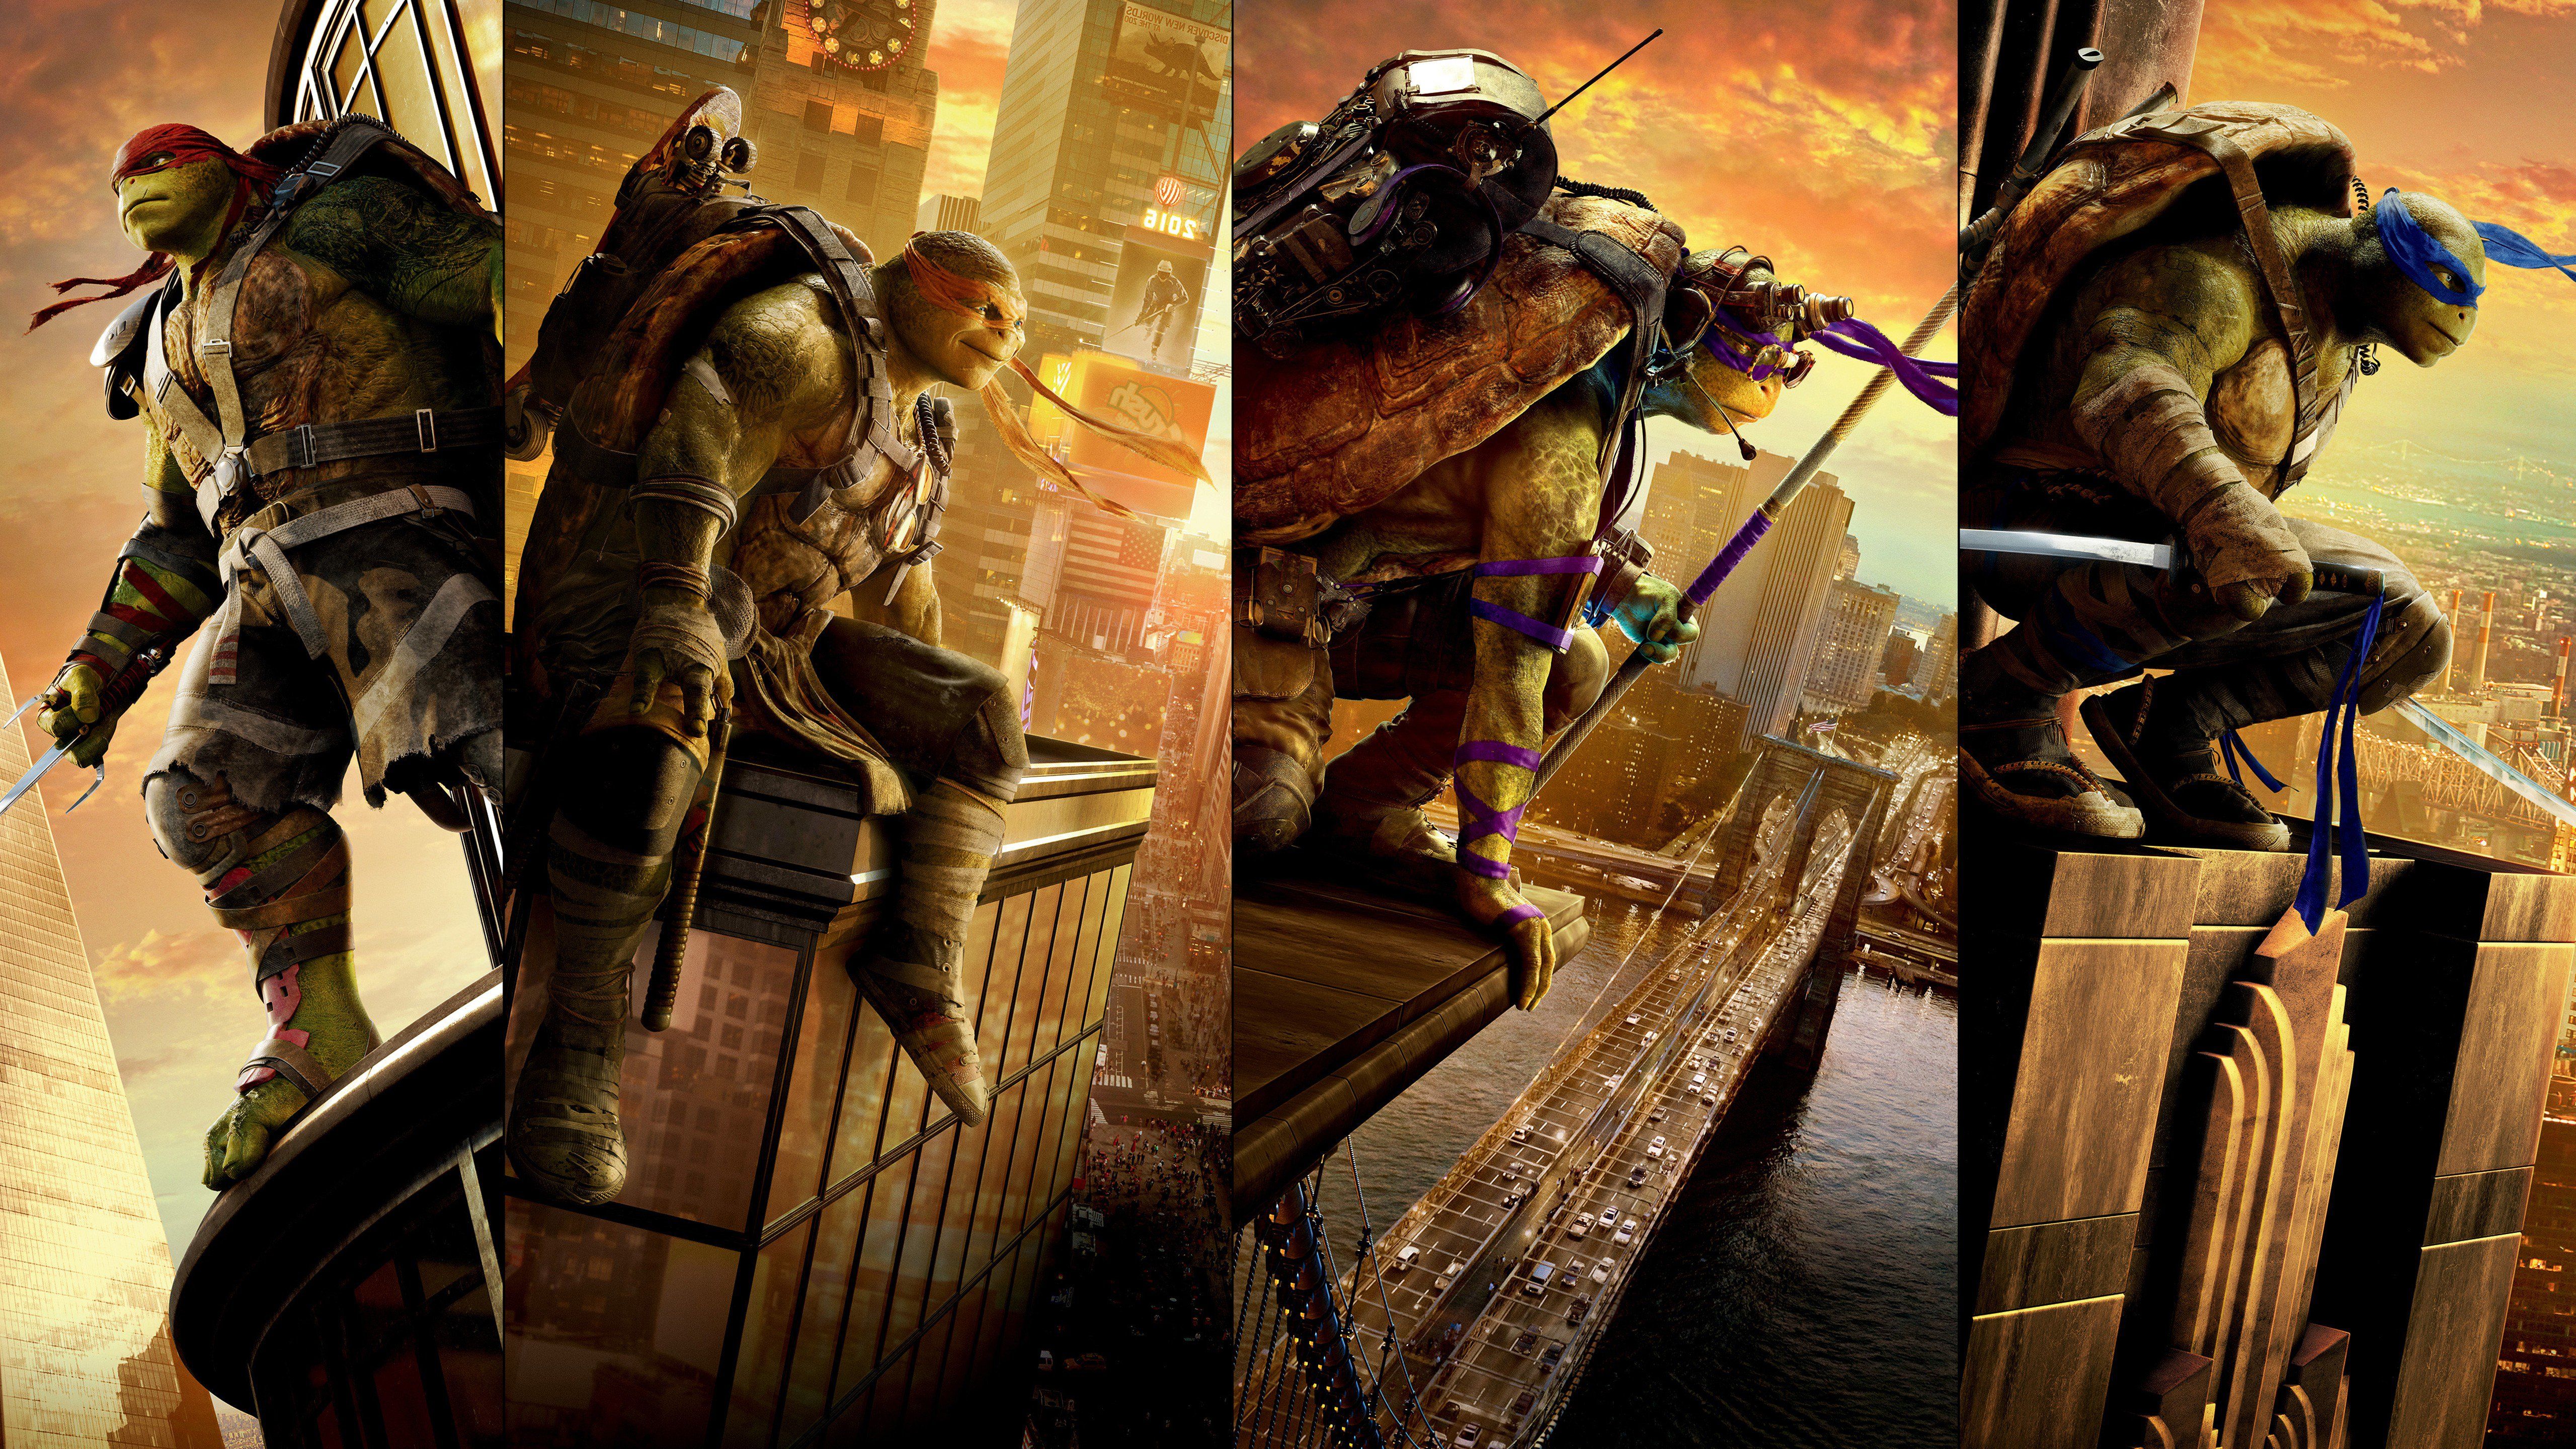 Teenage Mutant Ninja Turtles Movie Image, HD Movies, 4k Wallpaper, Image, Background, Photo and Picture